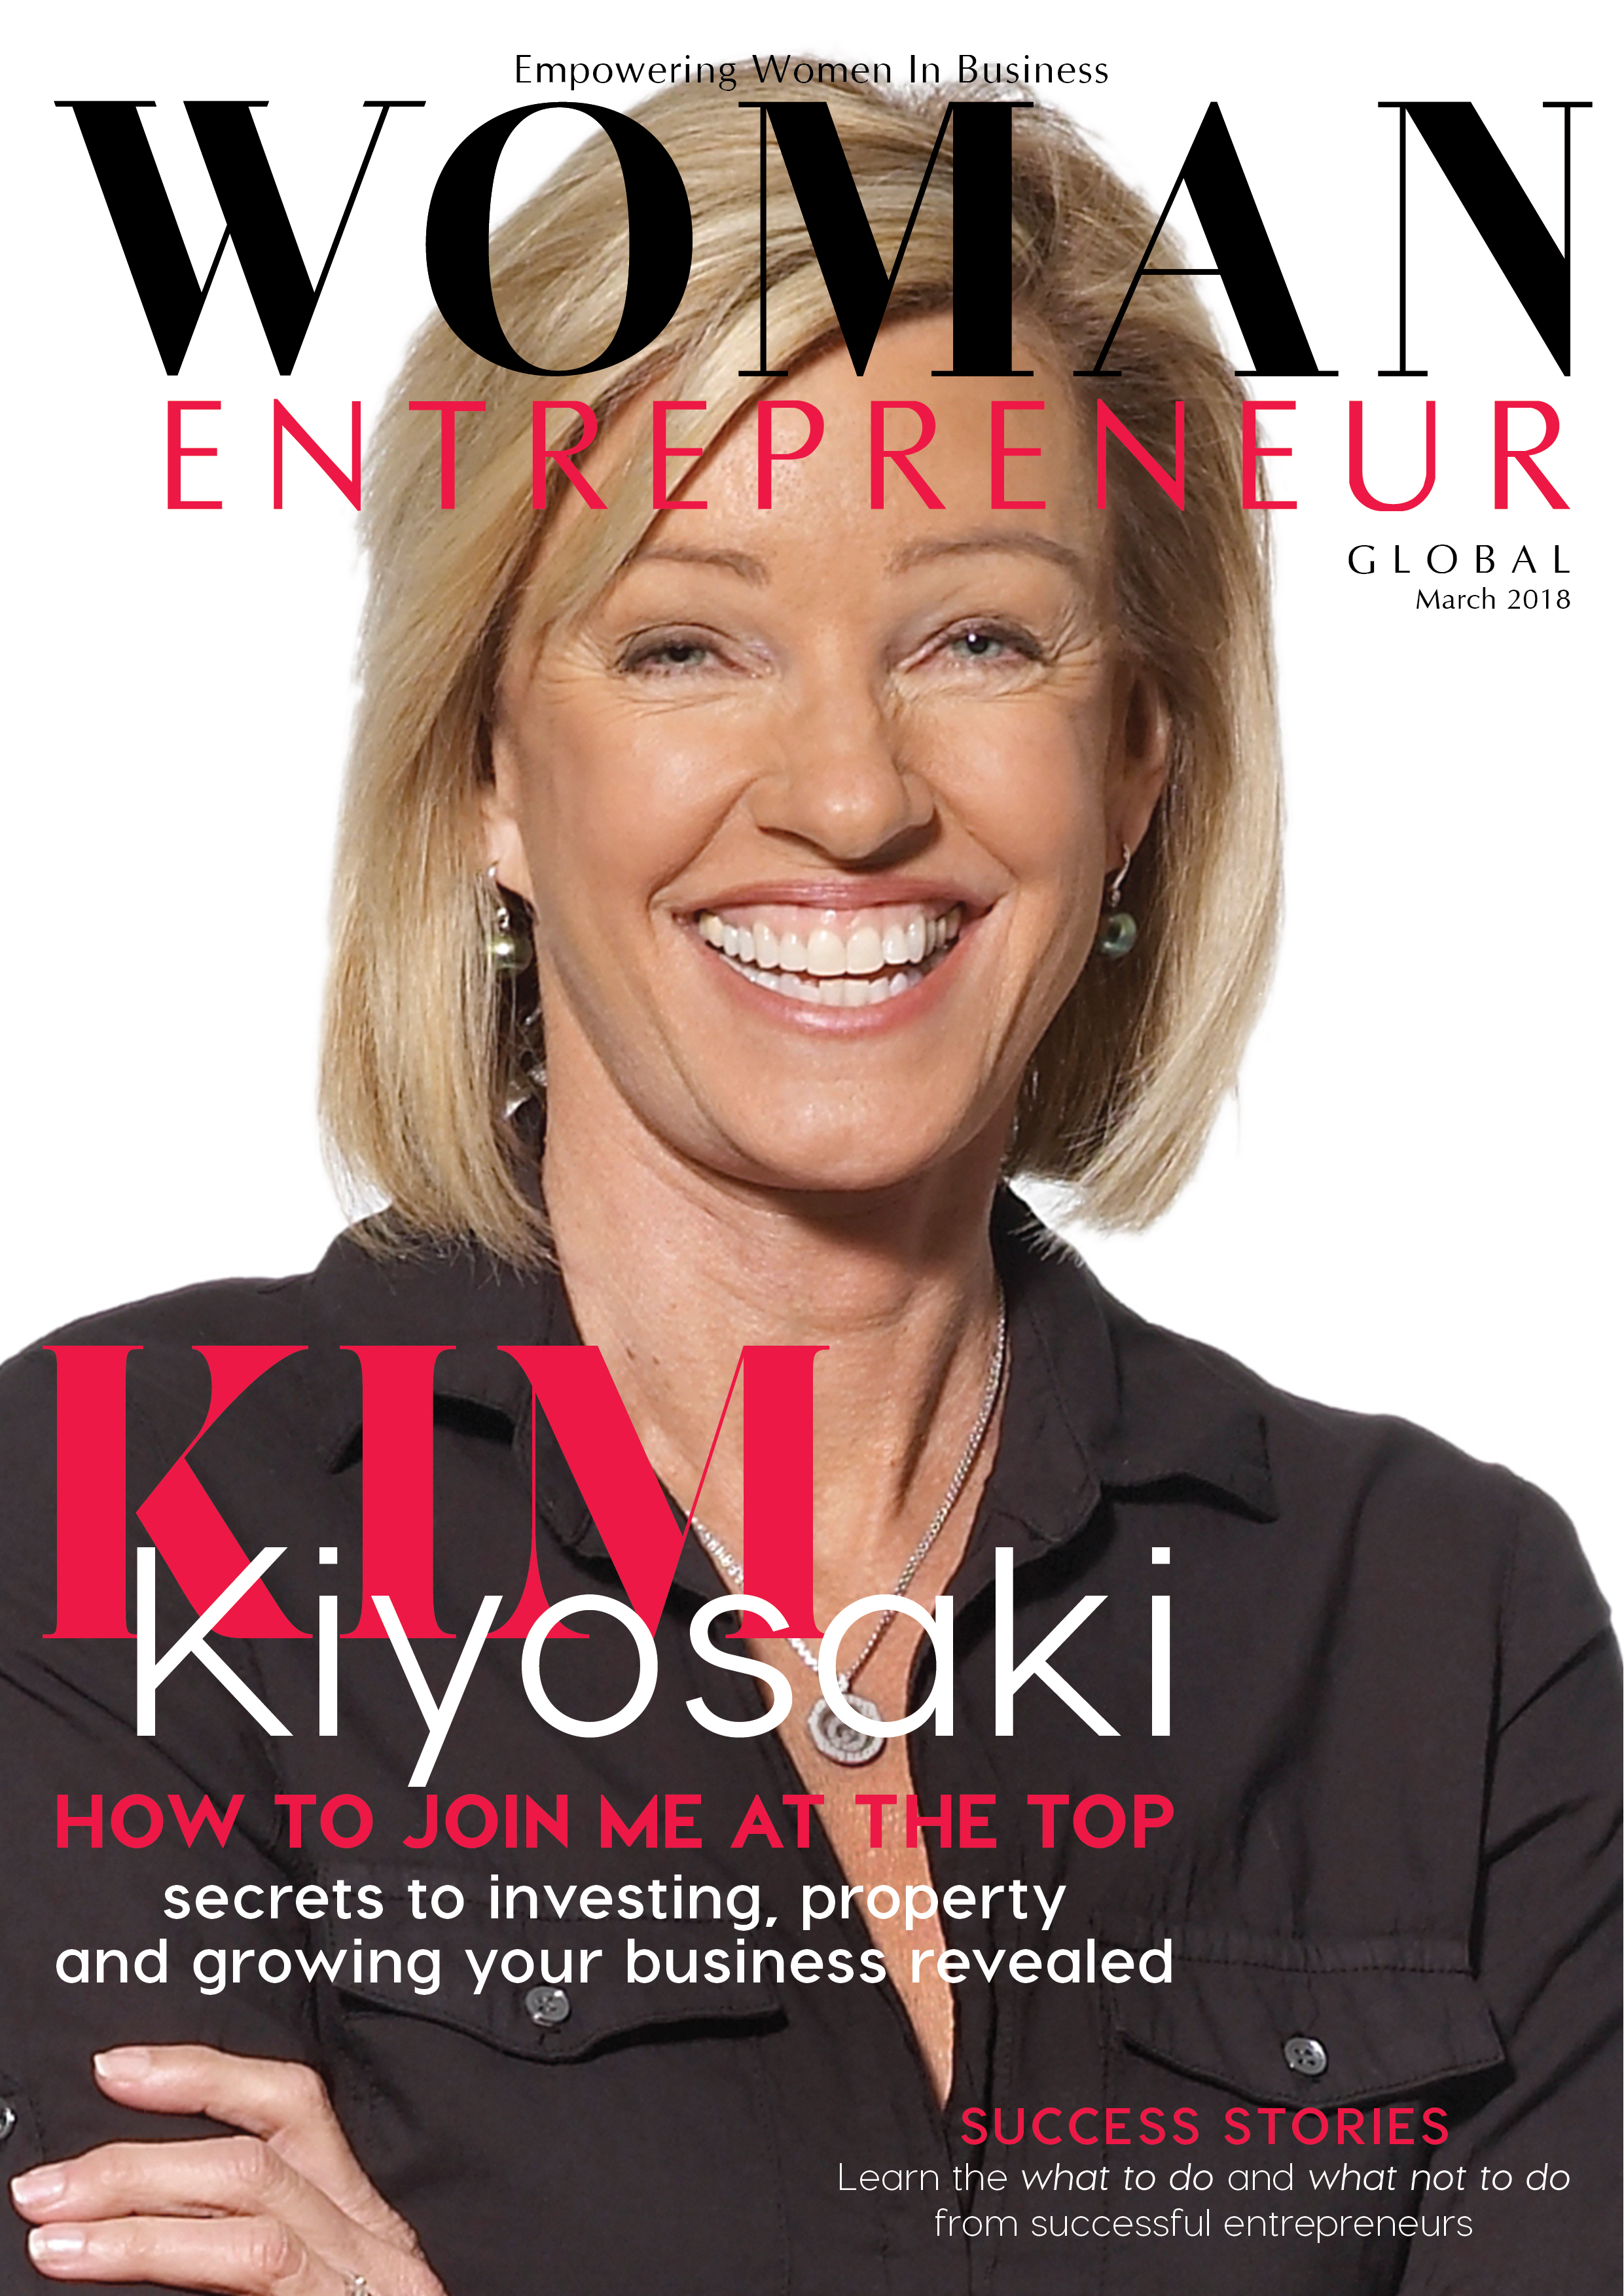 Kim Kiyosaki on Woman Entrepreneur Magazine Cover.jpg